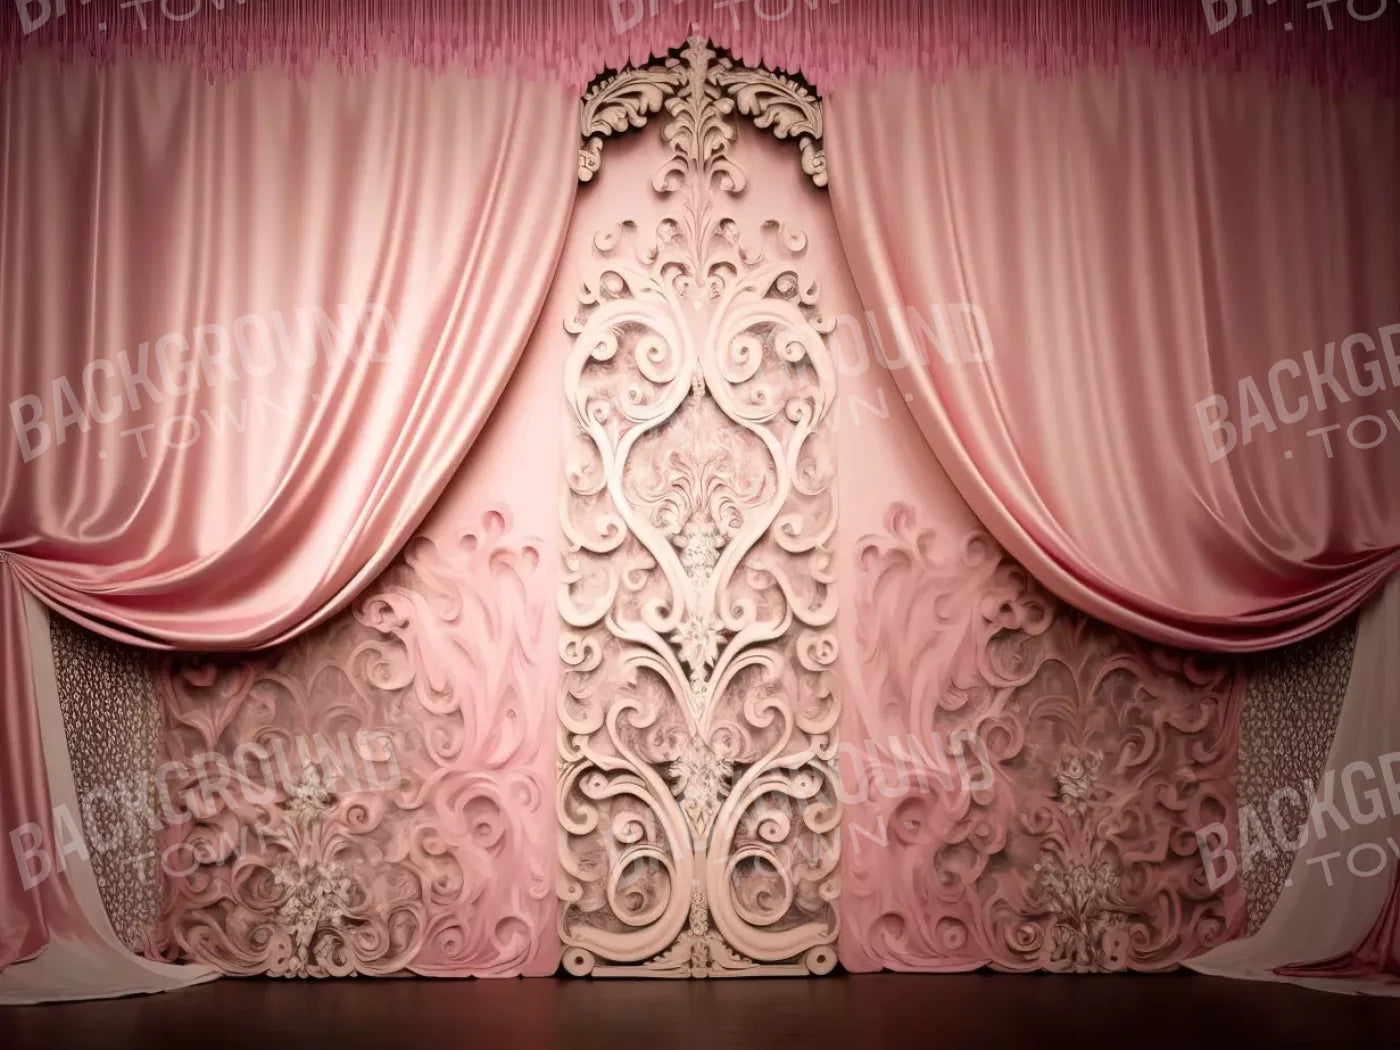 Doll House Curtains Iii 6’8X5’ Fleece (80 X 60 Inch) Backdrop